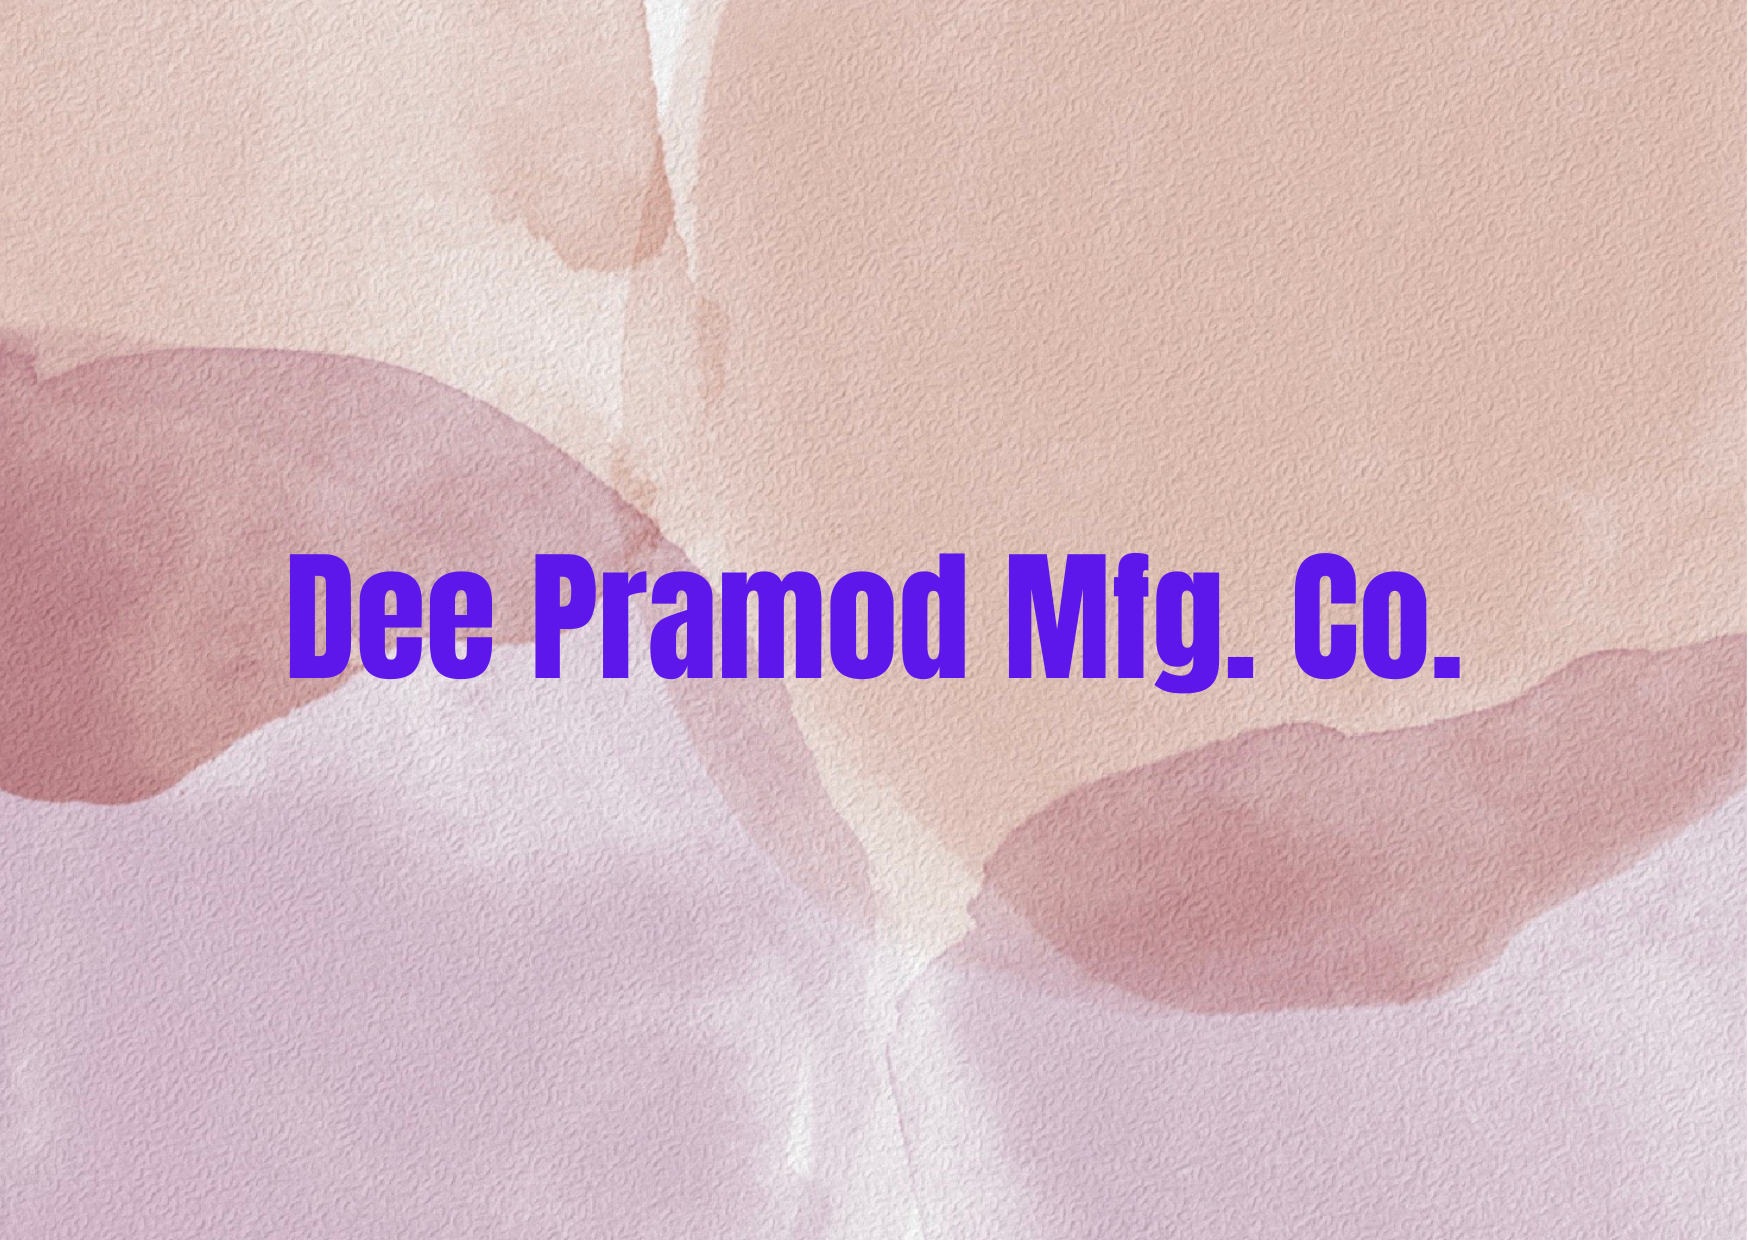 Dee Pramod Mfg. Co.,   